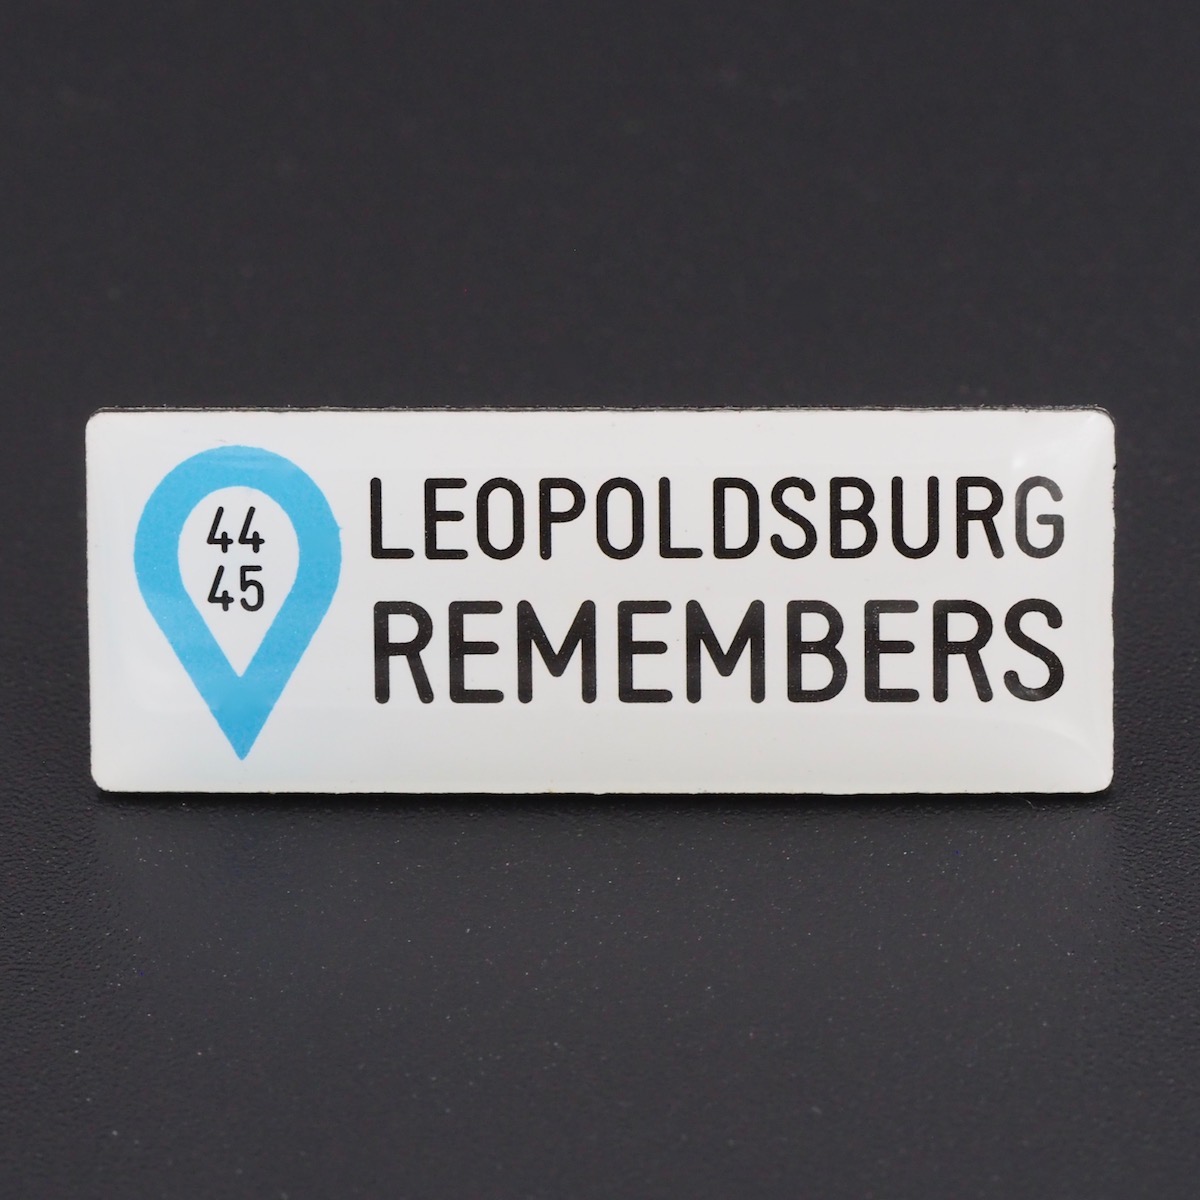 Pin's Passion-Leopoldsburg-Remembers-44-45-Zijdeglans-Filmprint-Pins